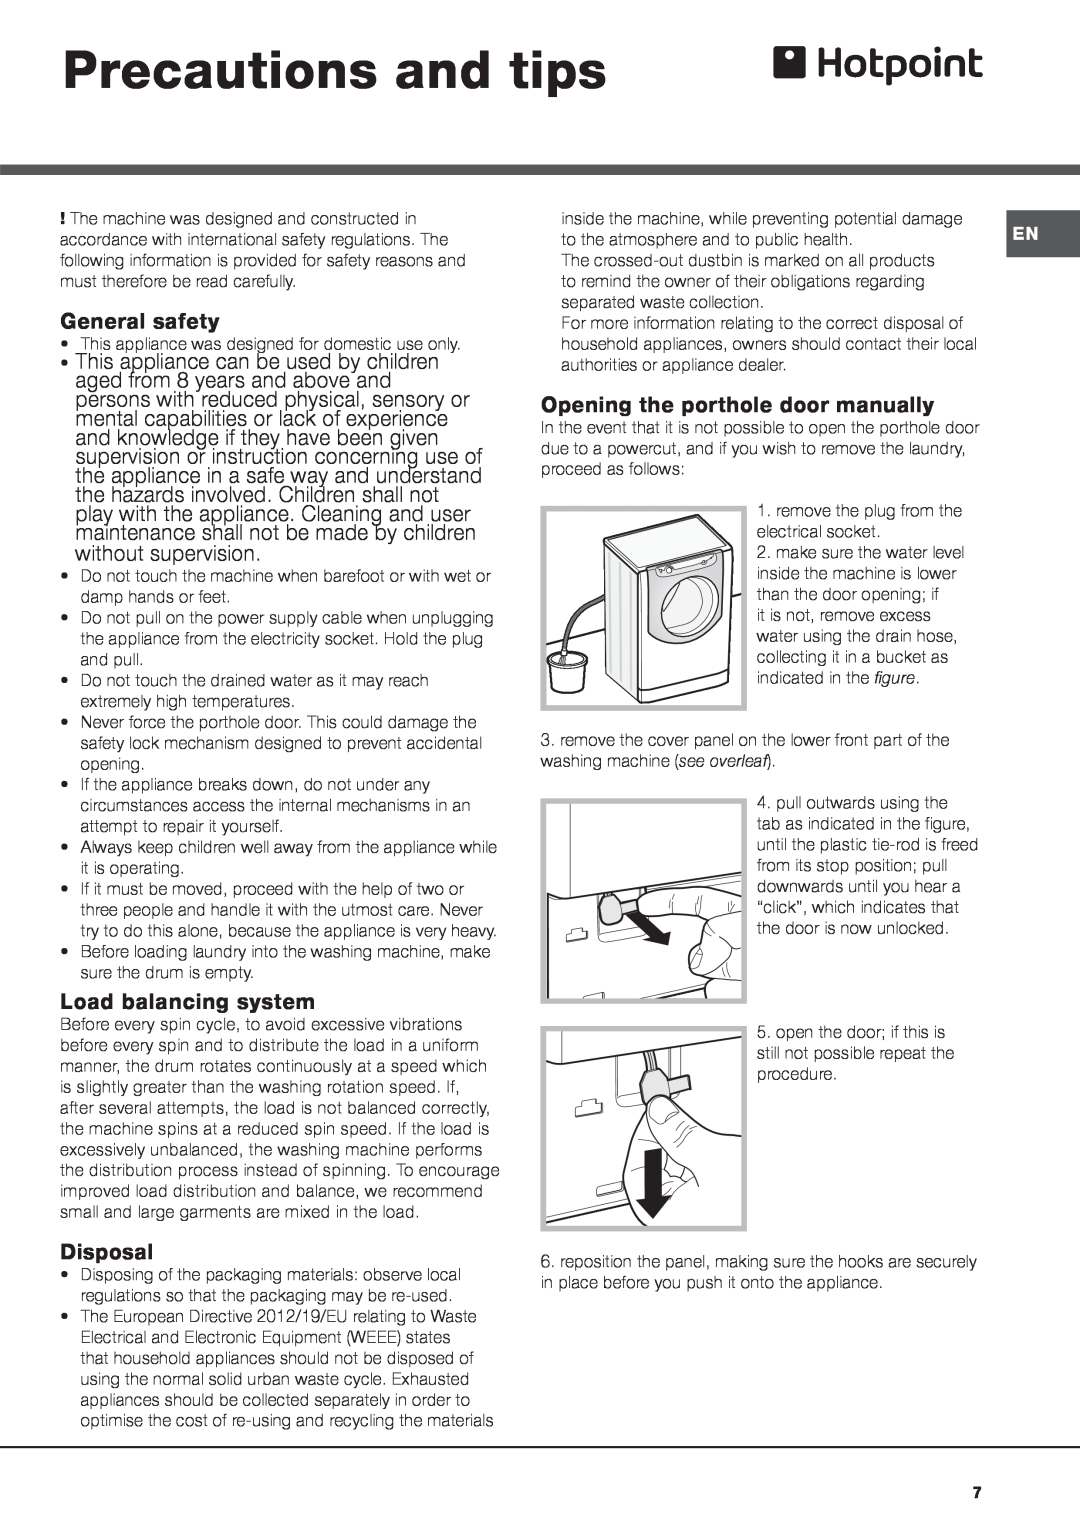 Hotpoint aq133da 697i manual Precautions and tips, General safety, Load balancing system, Disposal 